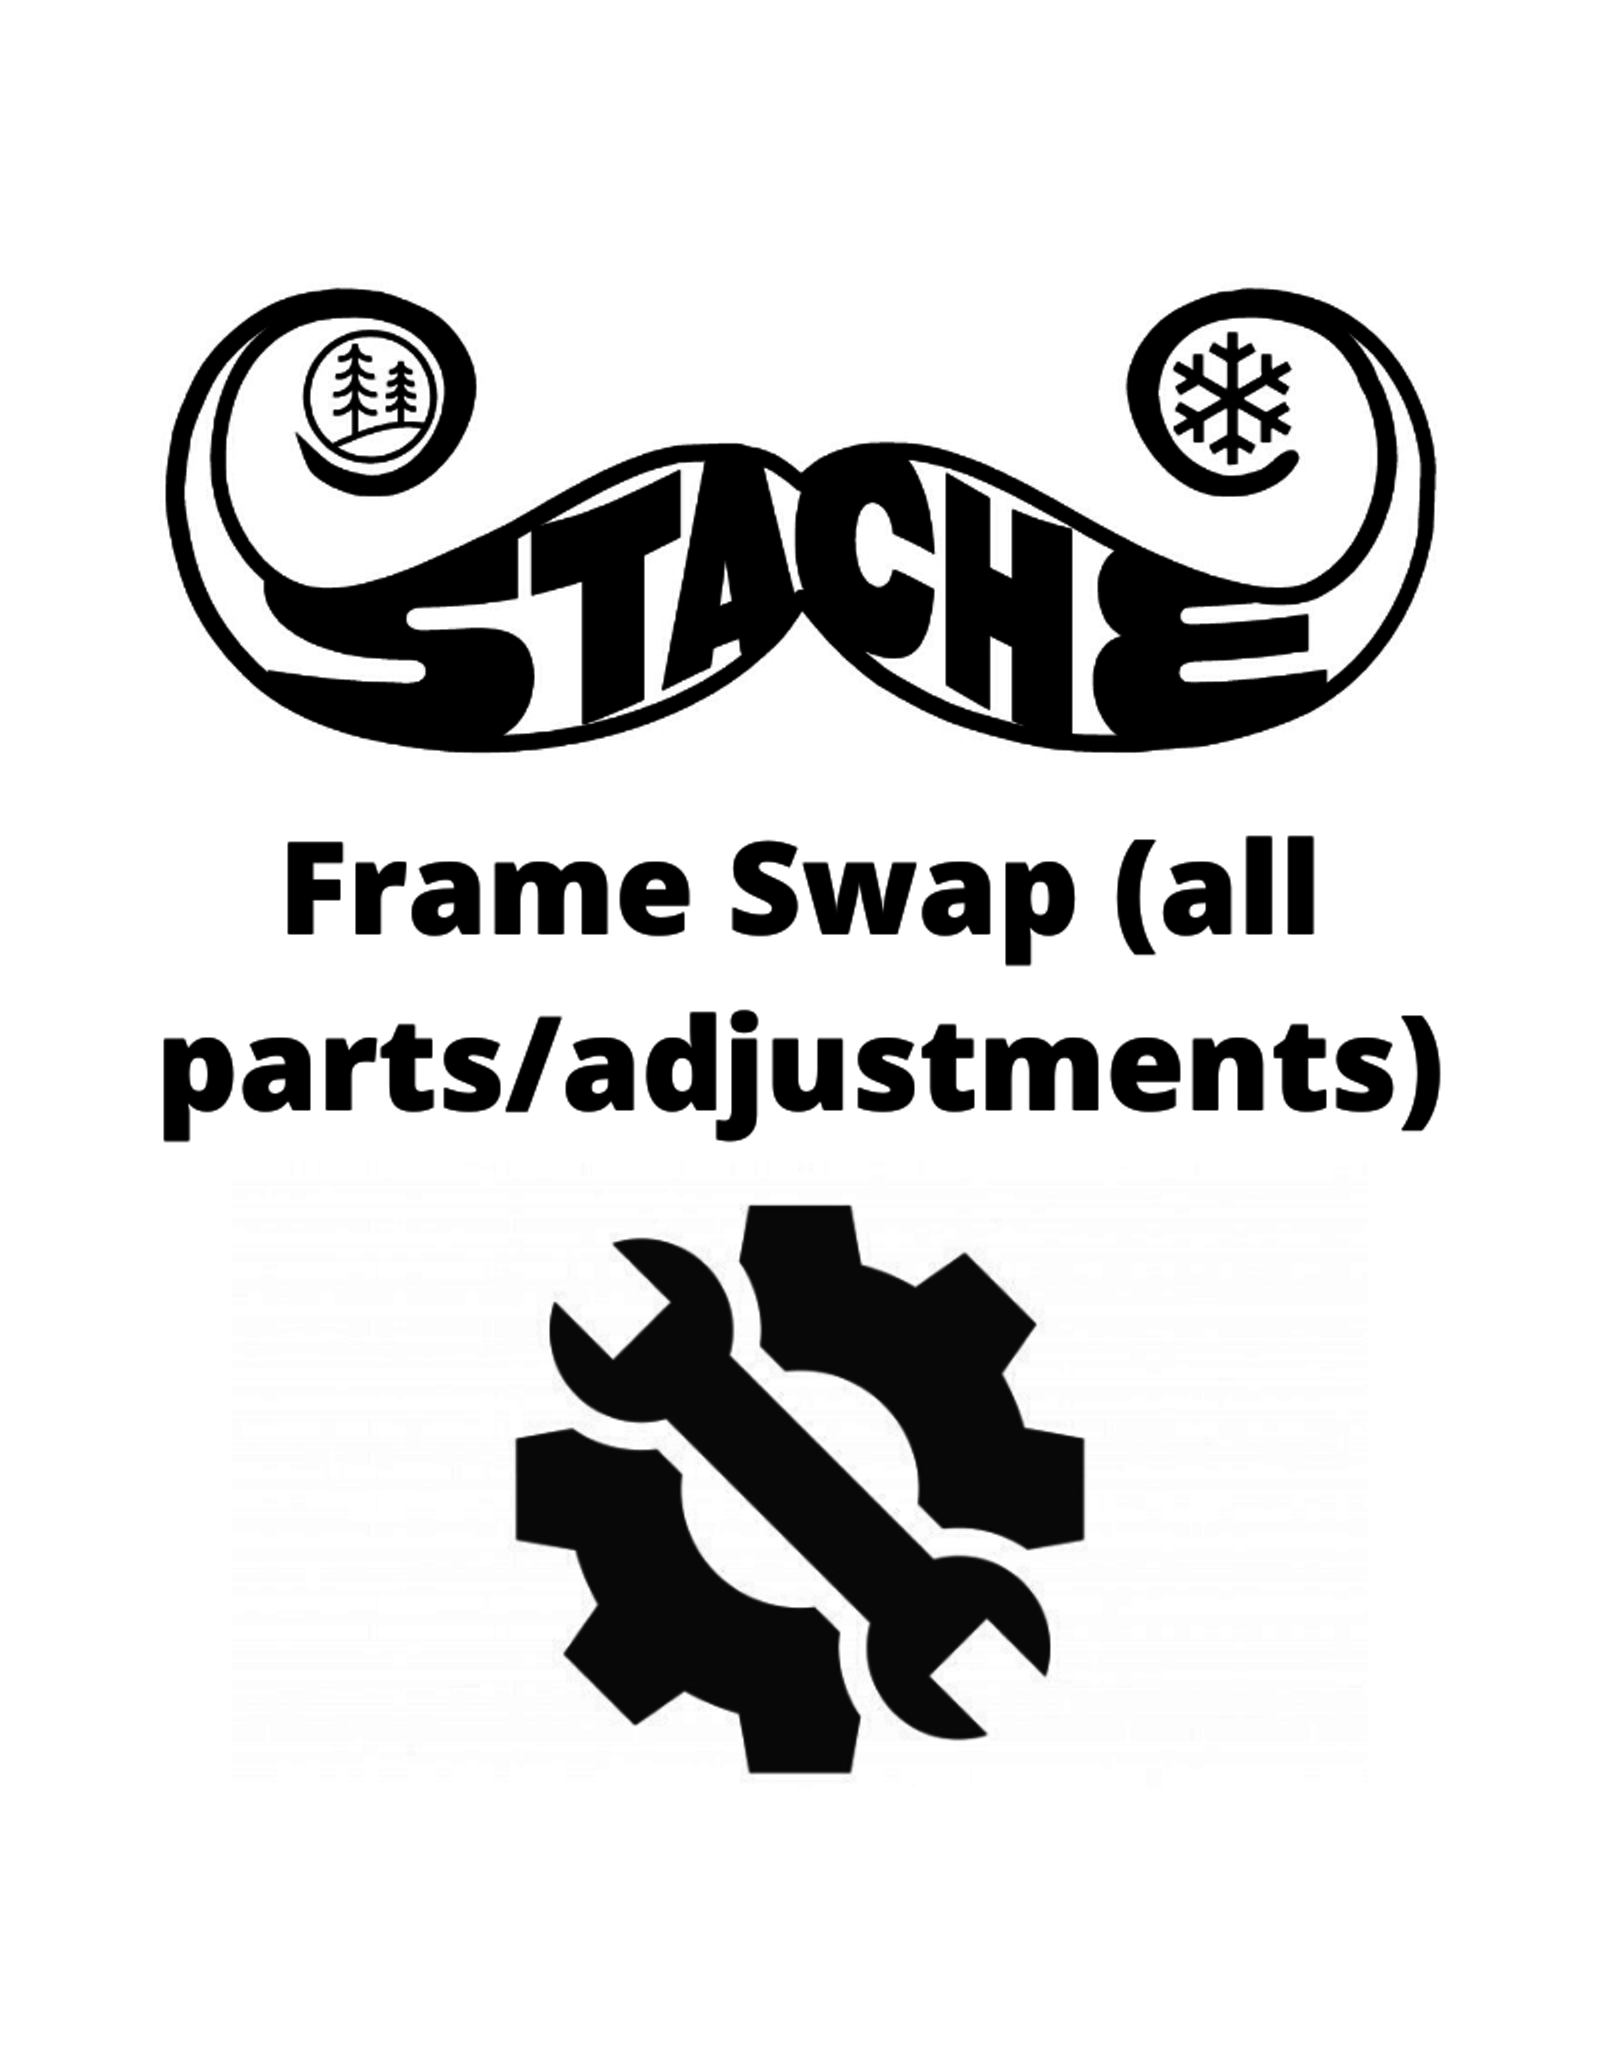 Frame swap (all parts/adjustments)